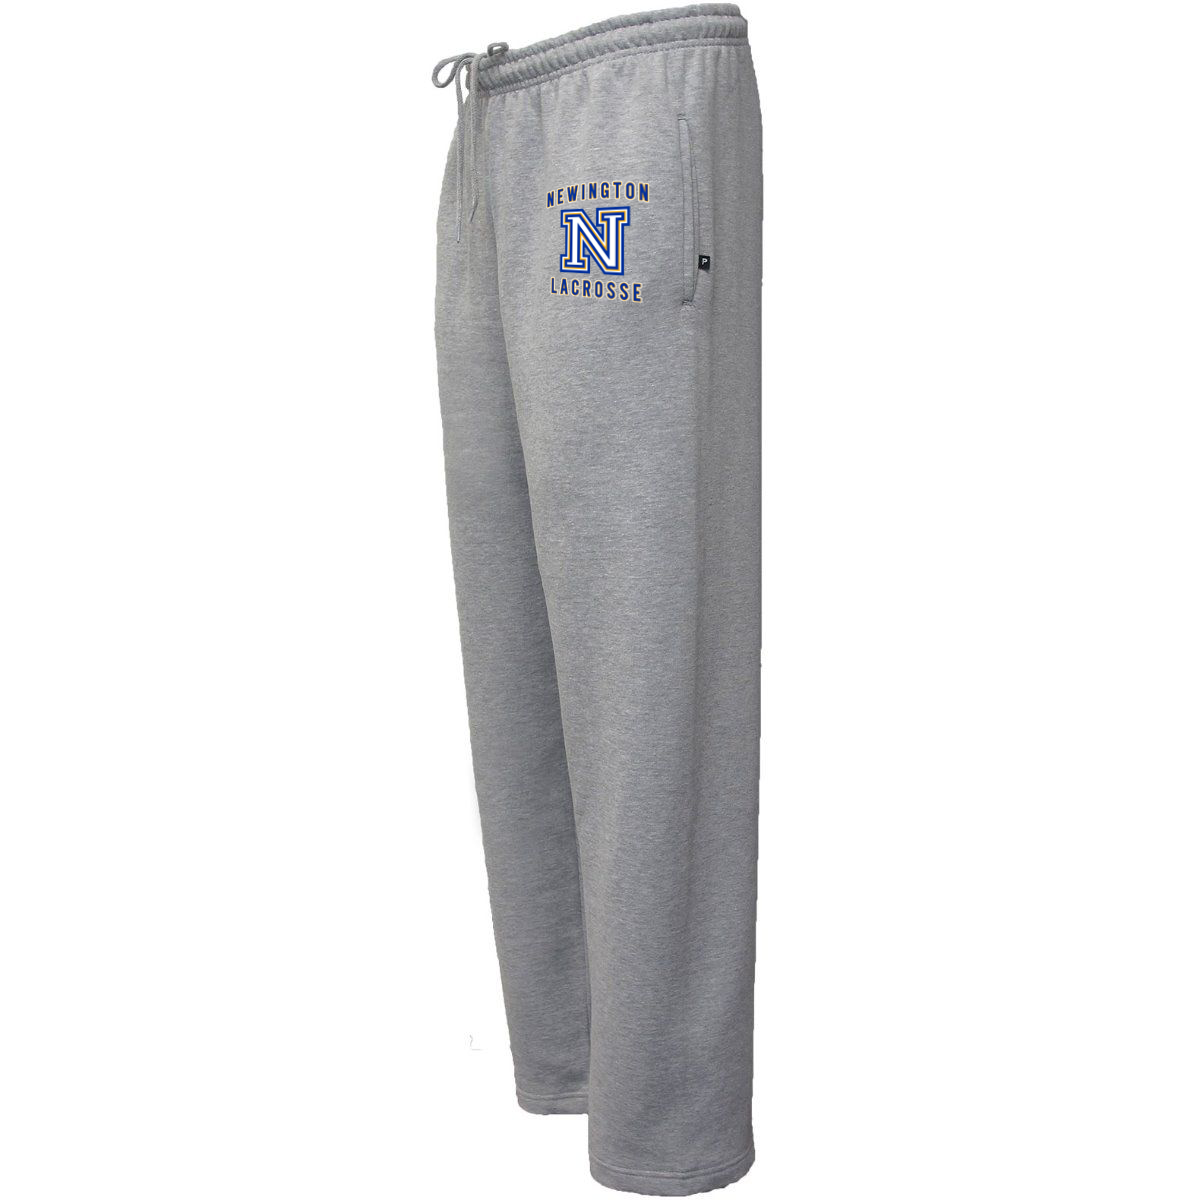 Newington Lacrosse Grey Sweatpants